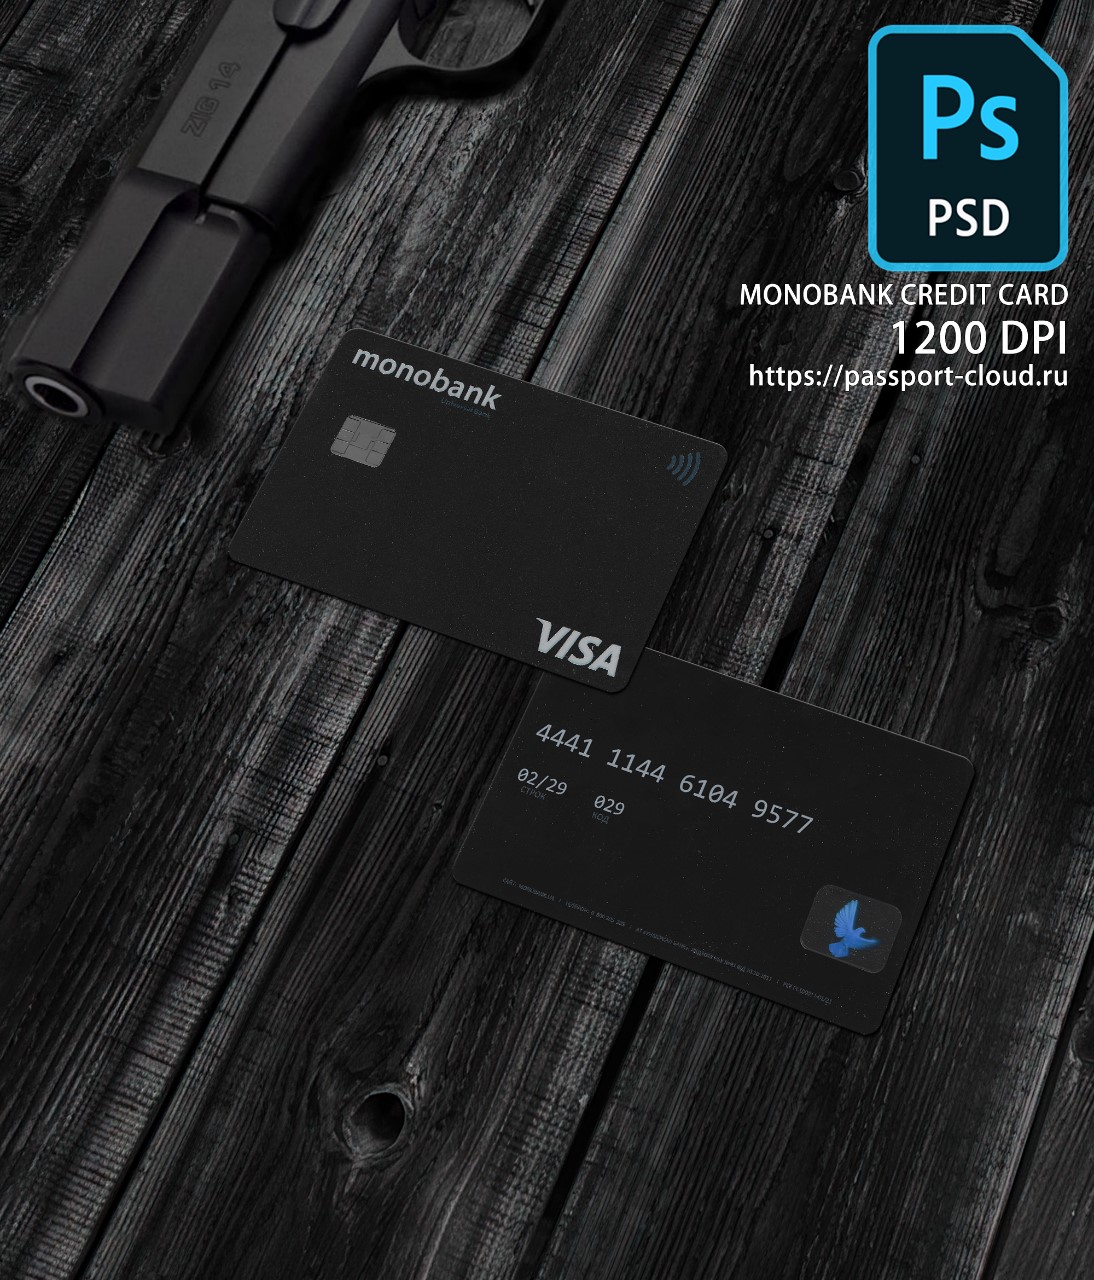 MonoBank Credit Card PSD-0